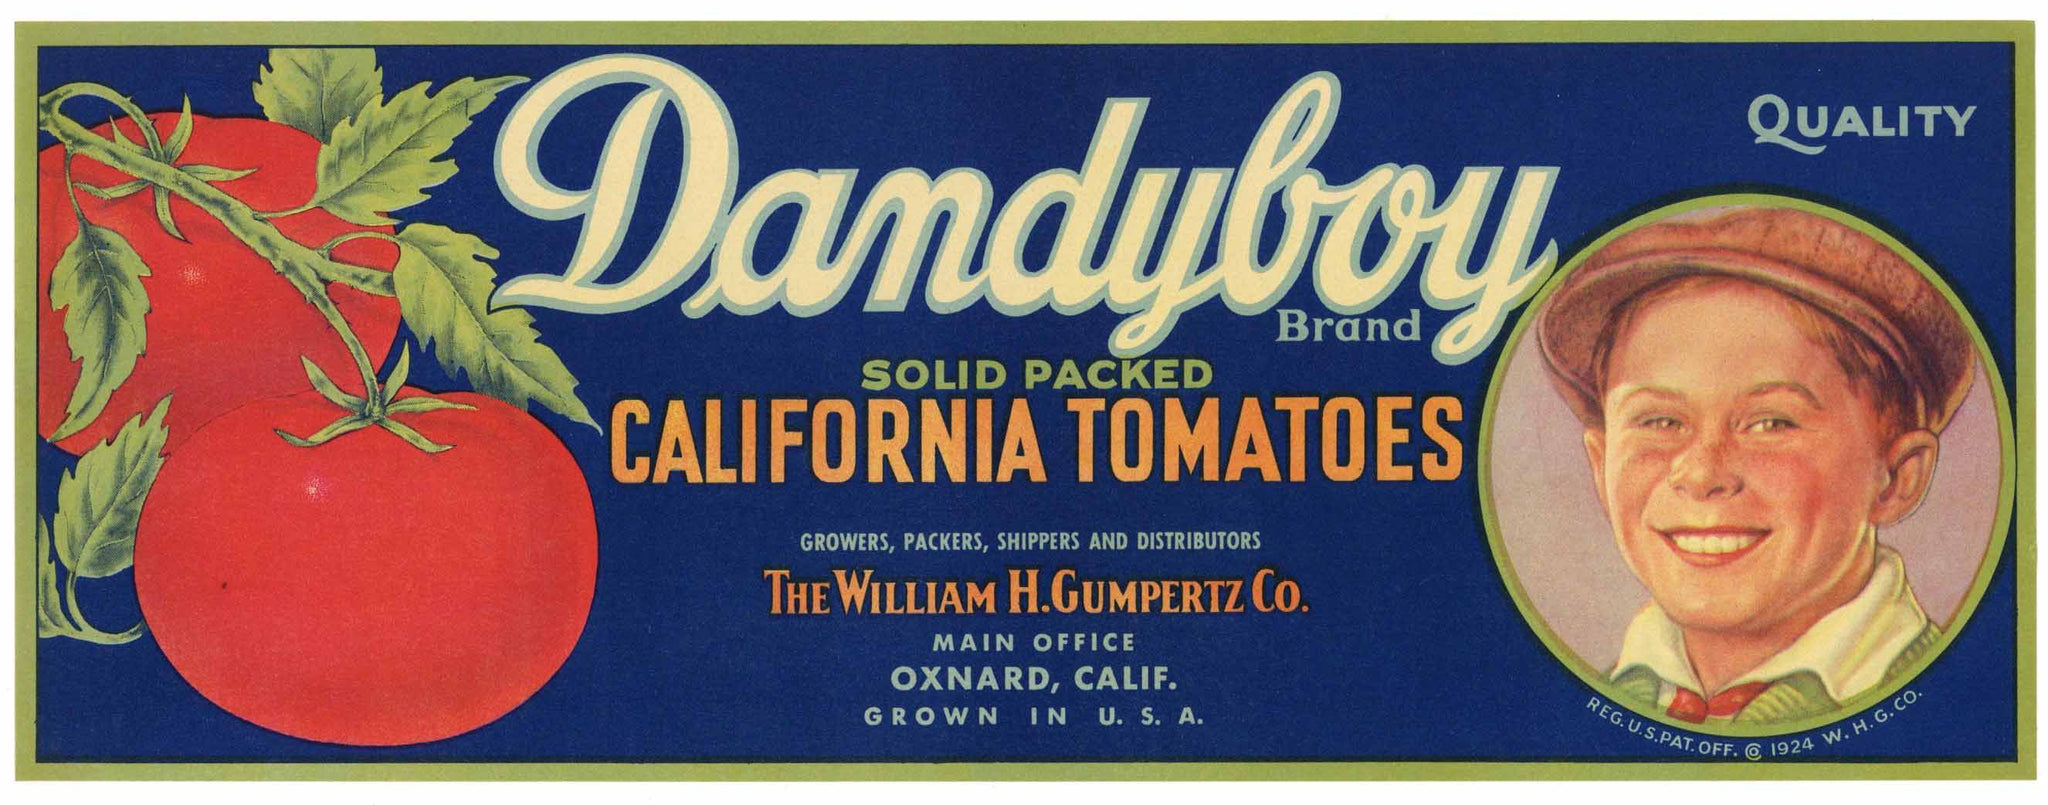 Dandyboy Brand Vintage Oxnard Tomato Crate Label